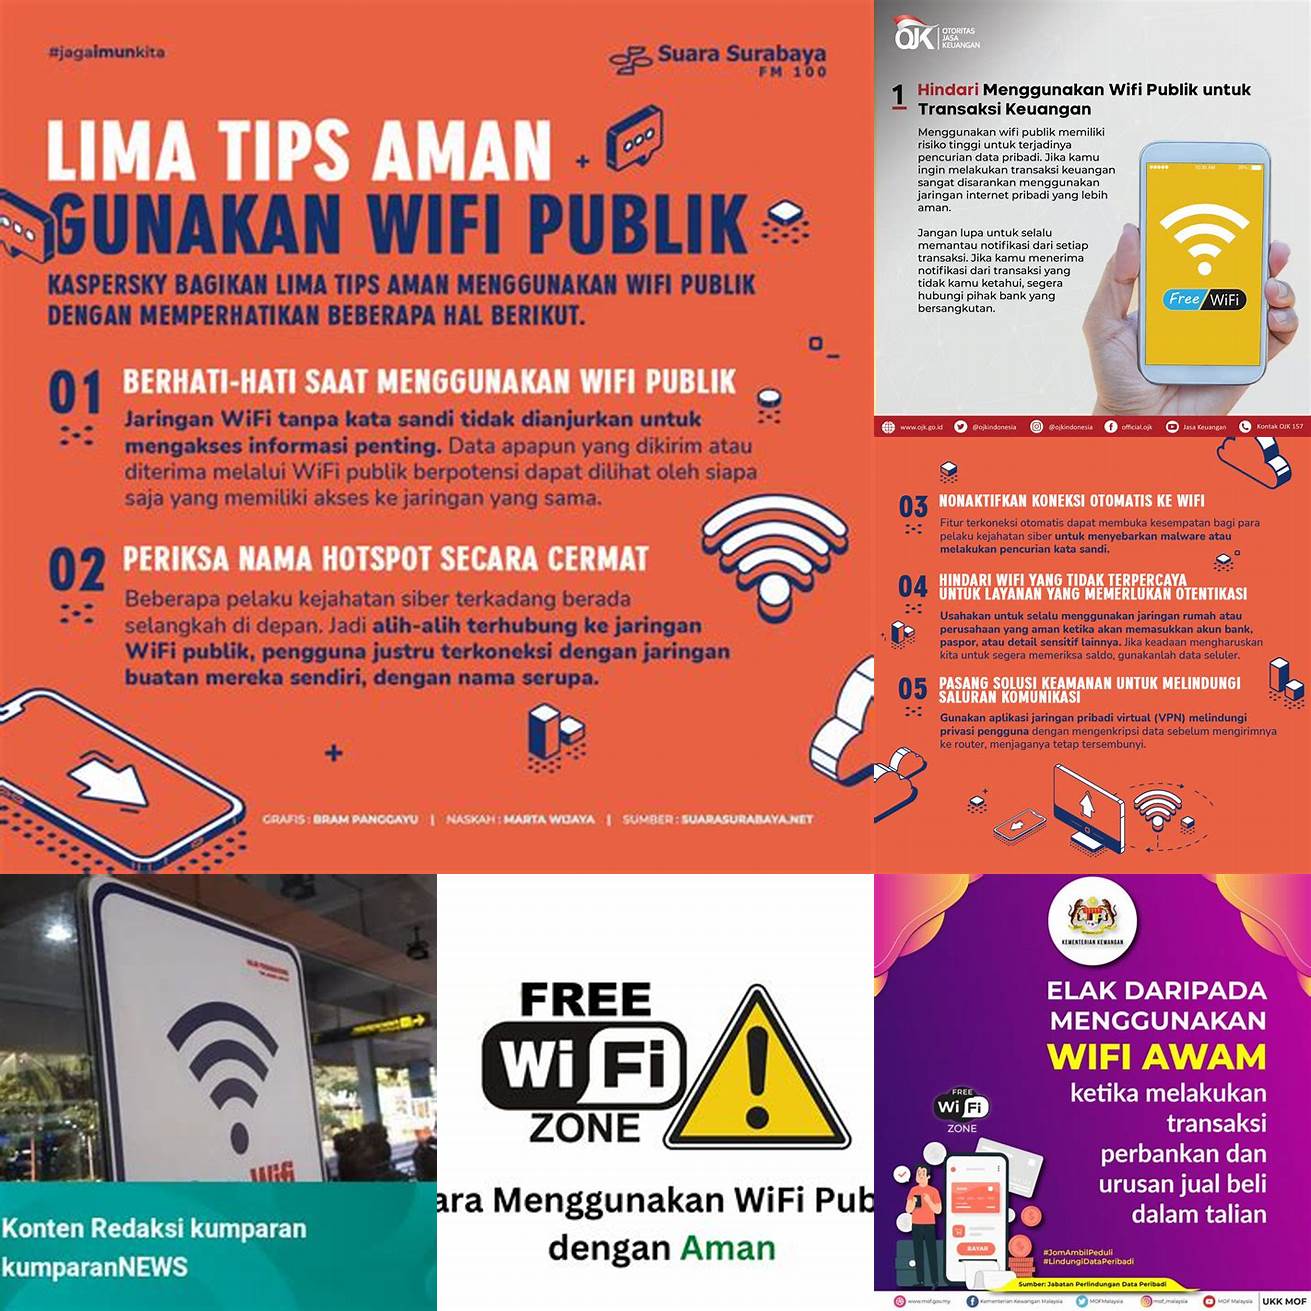 Jangan melakukan transaksi melalui jaringan Wi-Fi publik